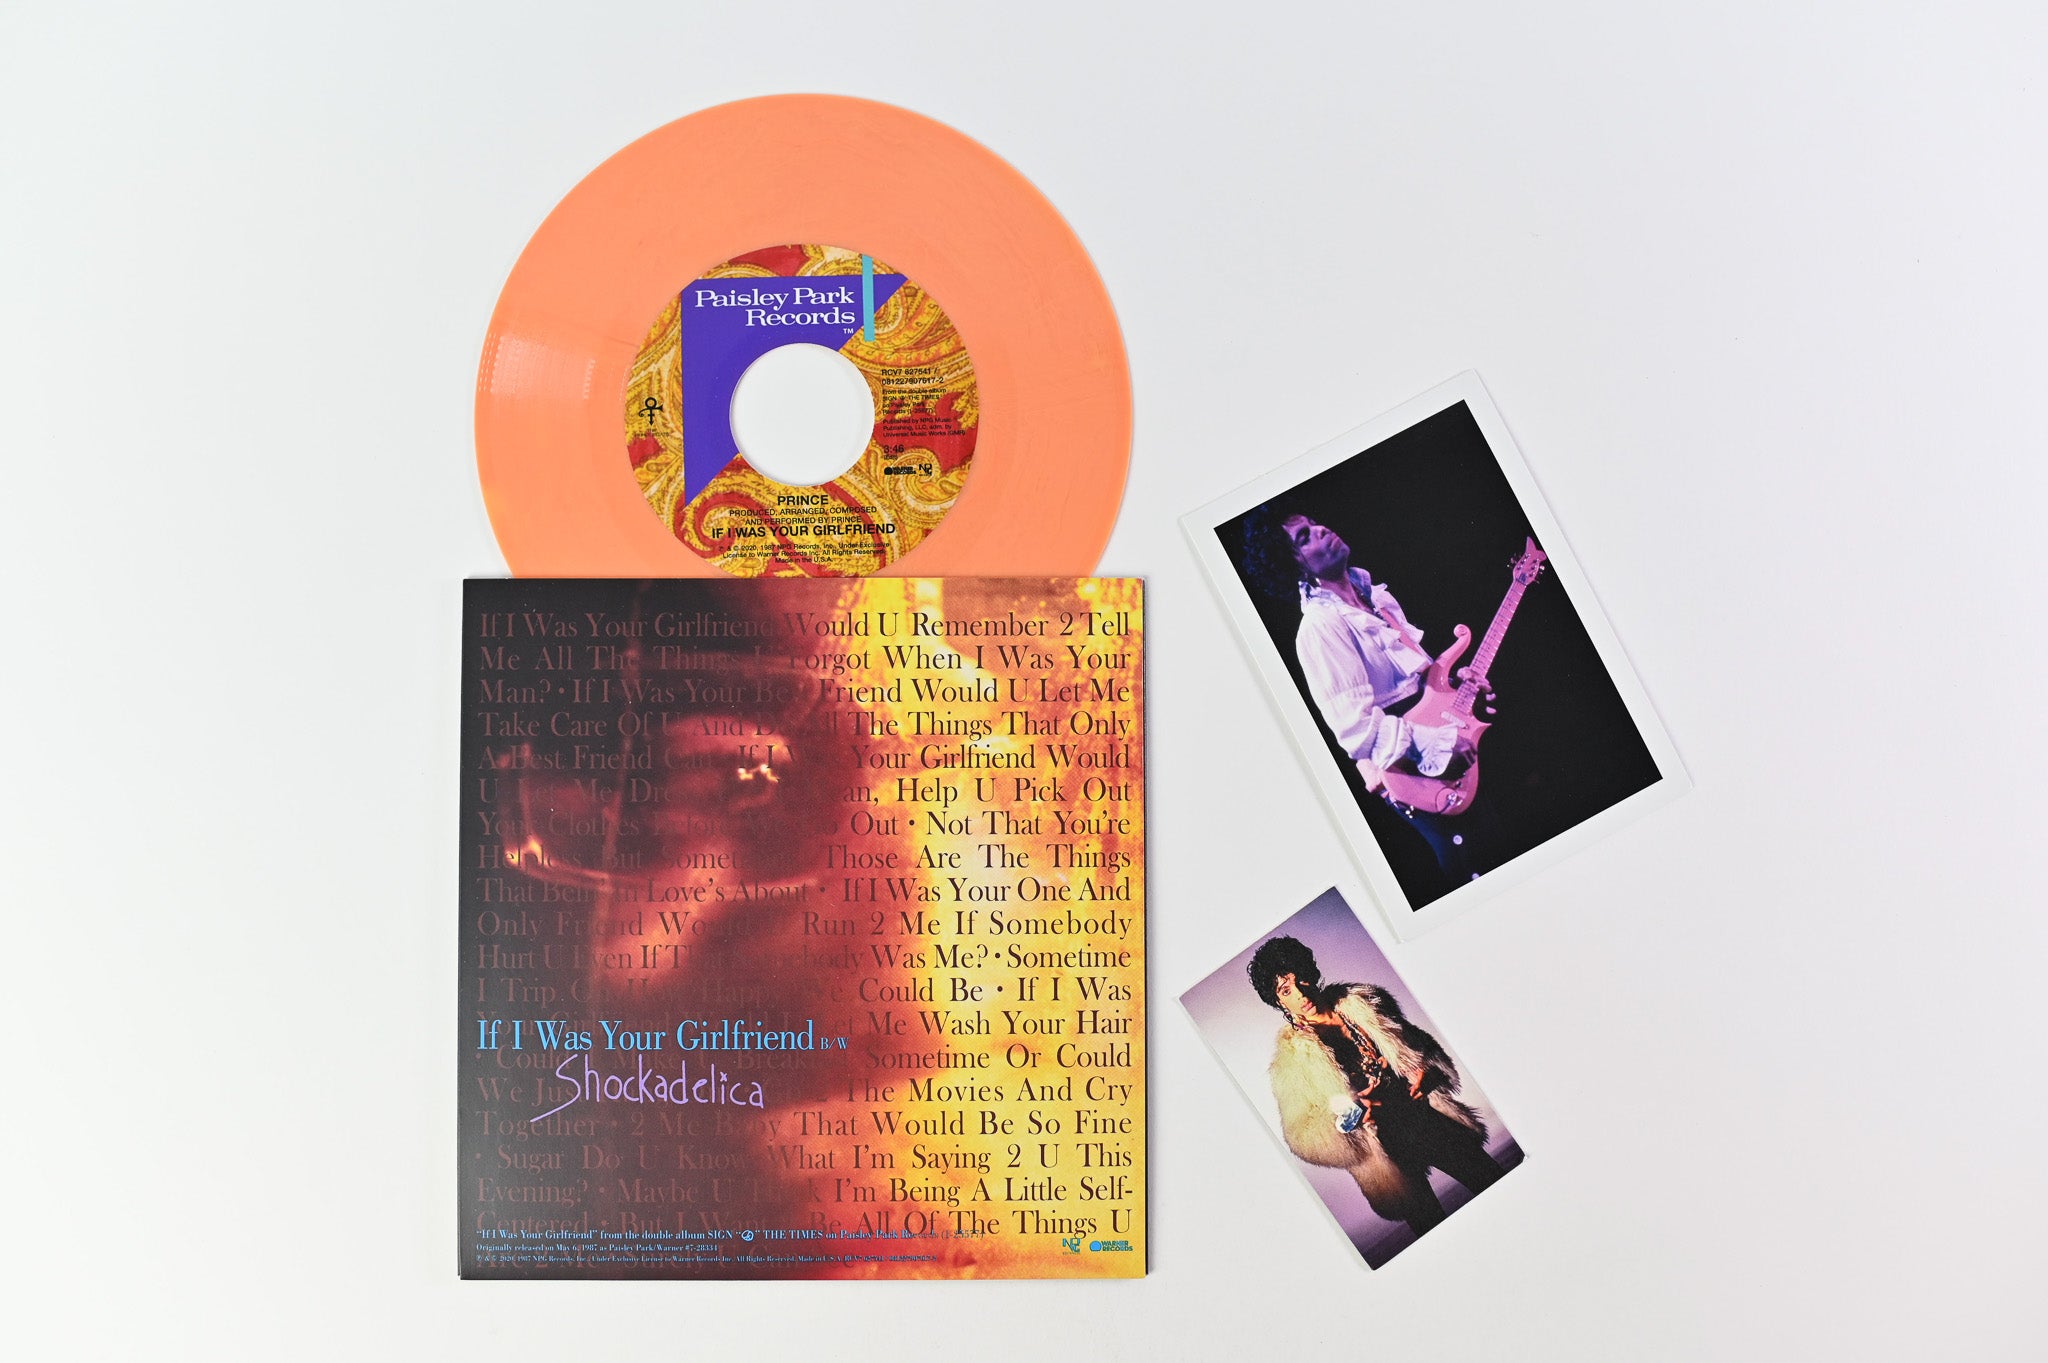 Prince - Sign "O" The Times – The Singles on NPG Warner Peach Vinyl 7" Ltd Numbered Box Set